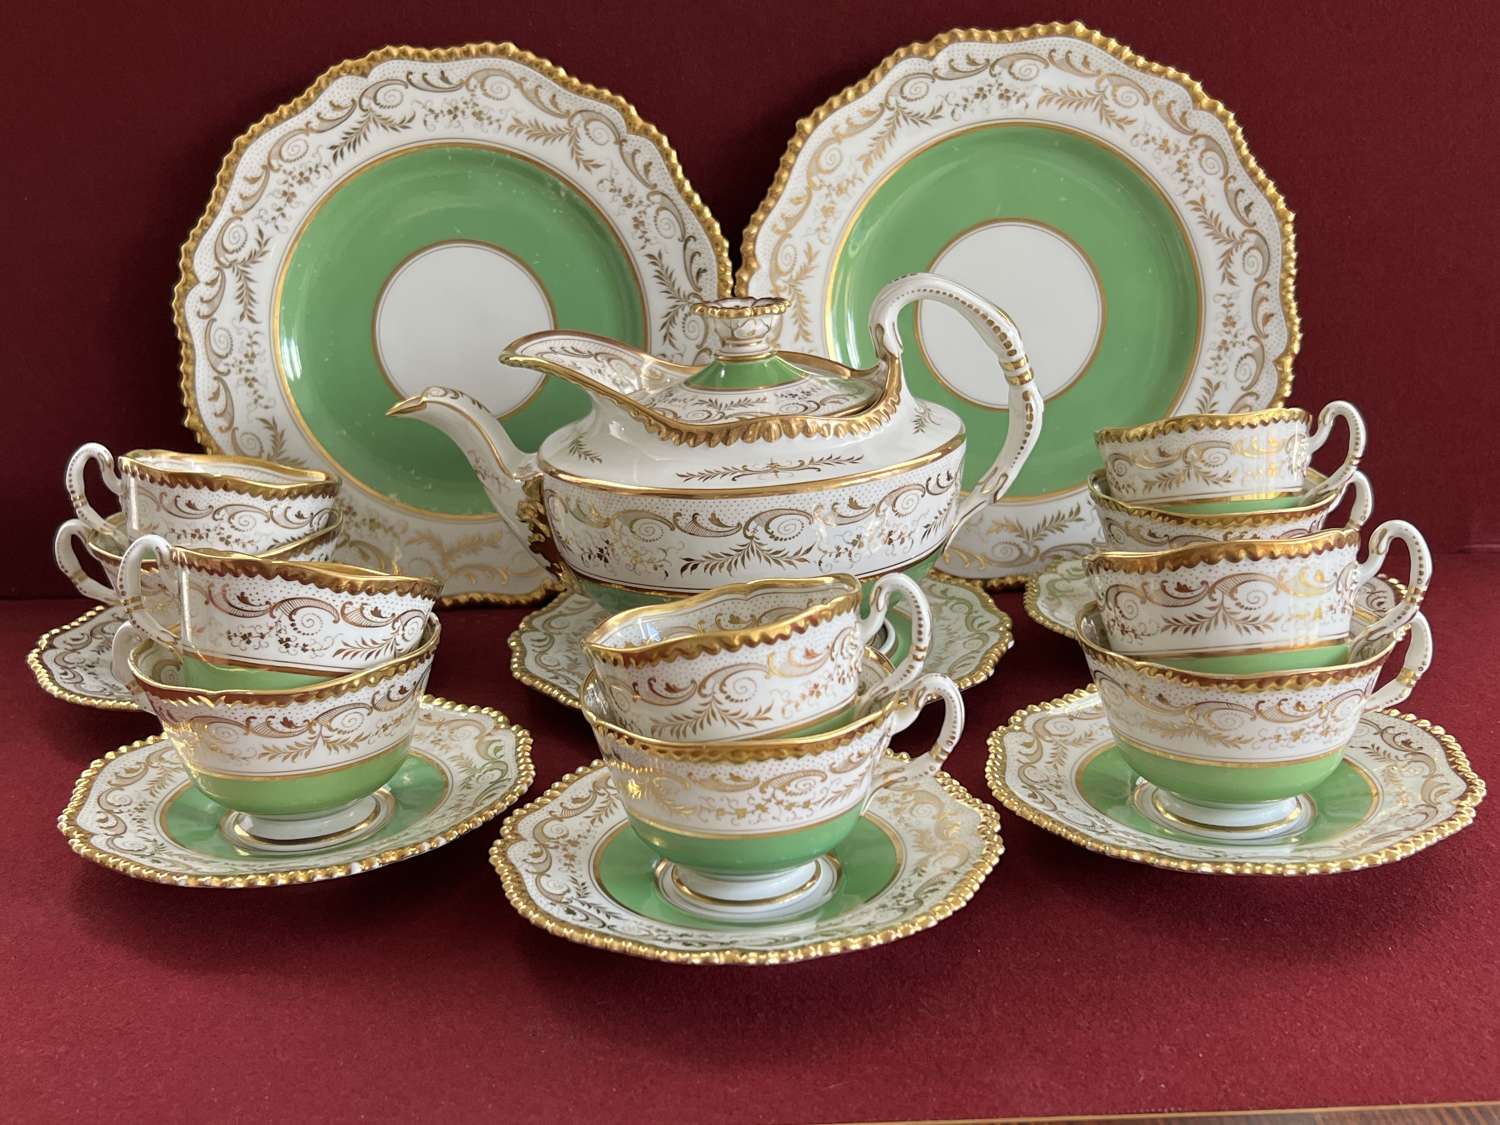 A Flight Barr & Barr Worcester Porcelain Tea & Coffee Set c.1820-30